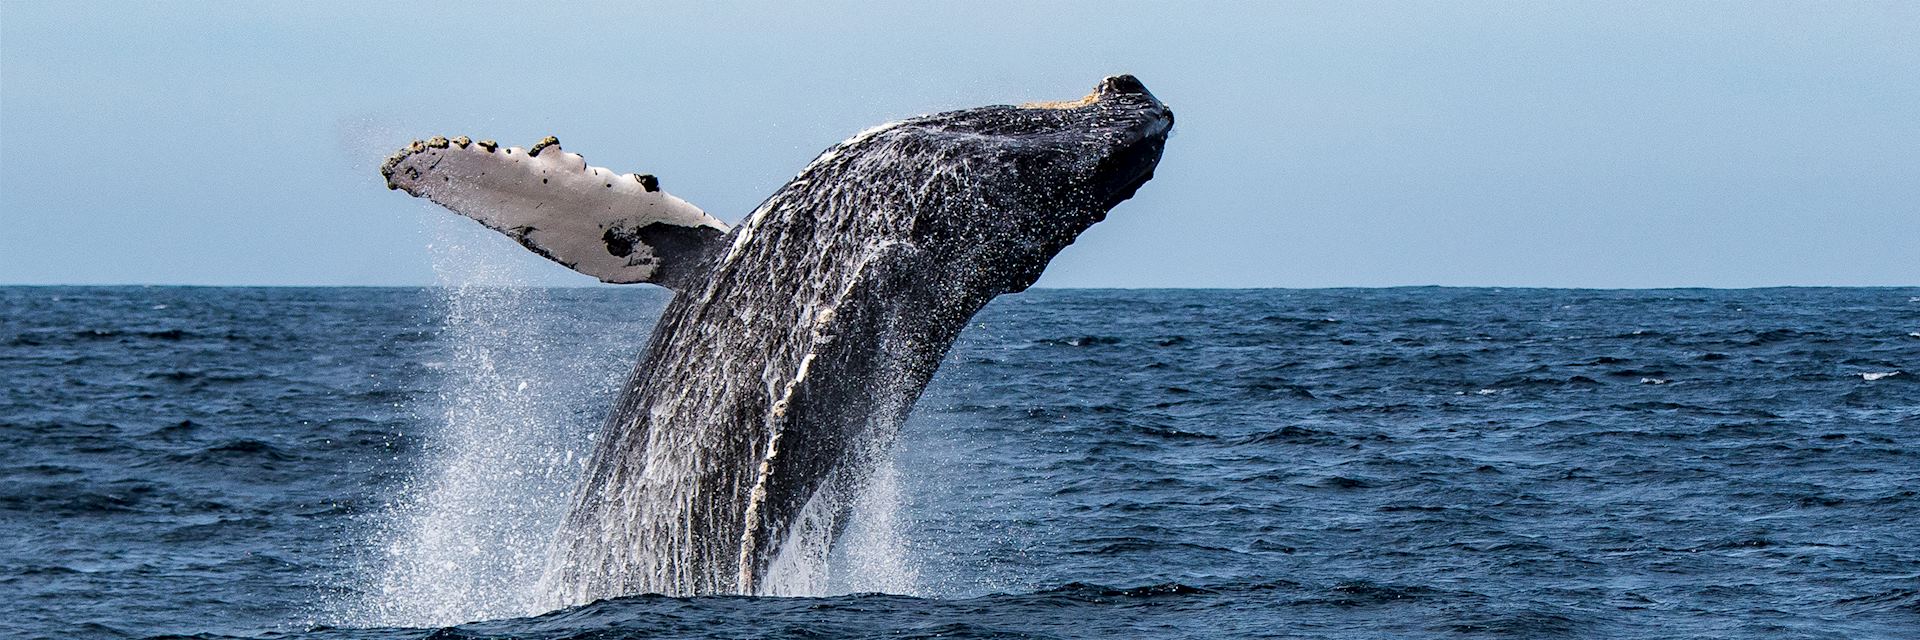 Humpback whale in the Sea of Cortez